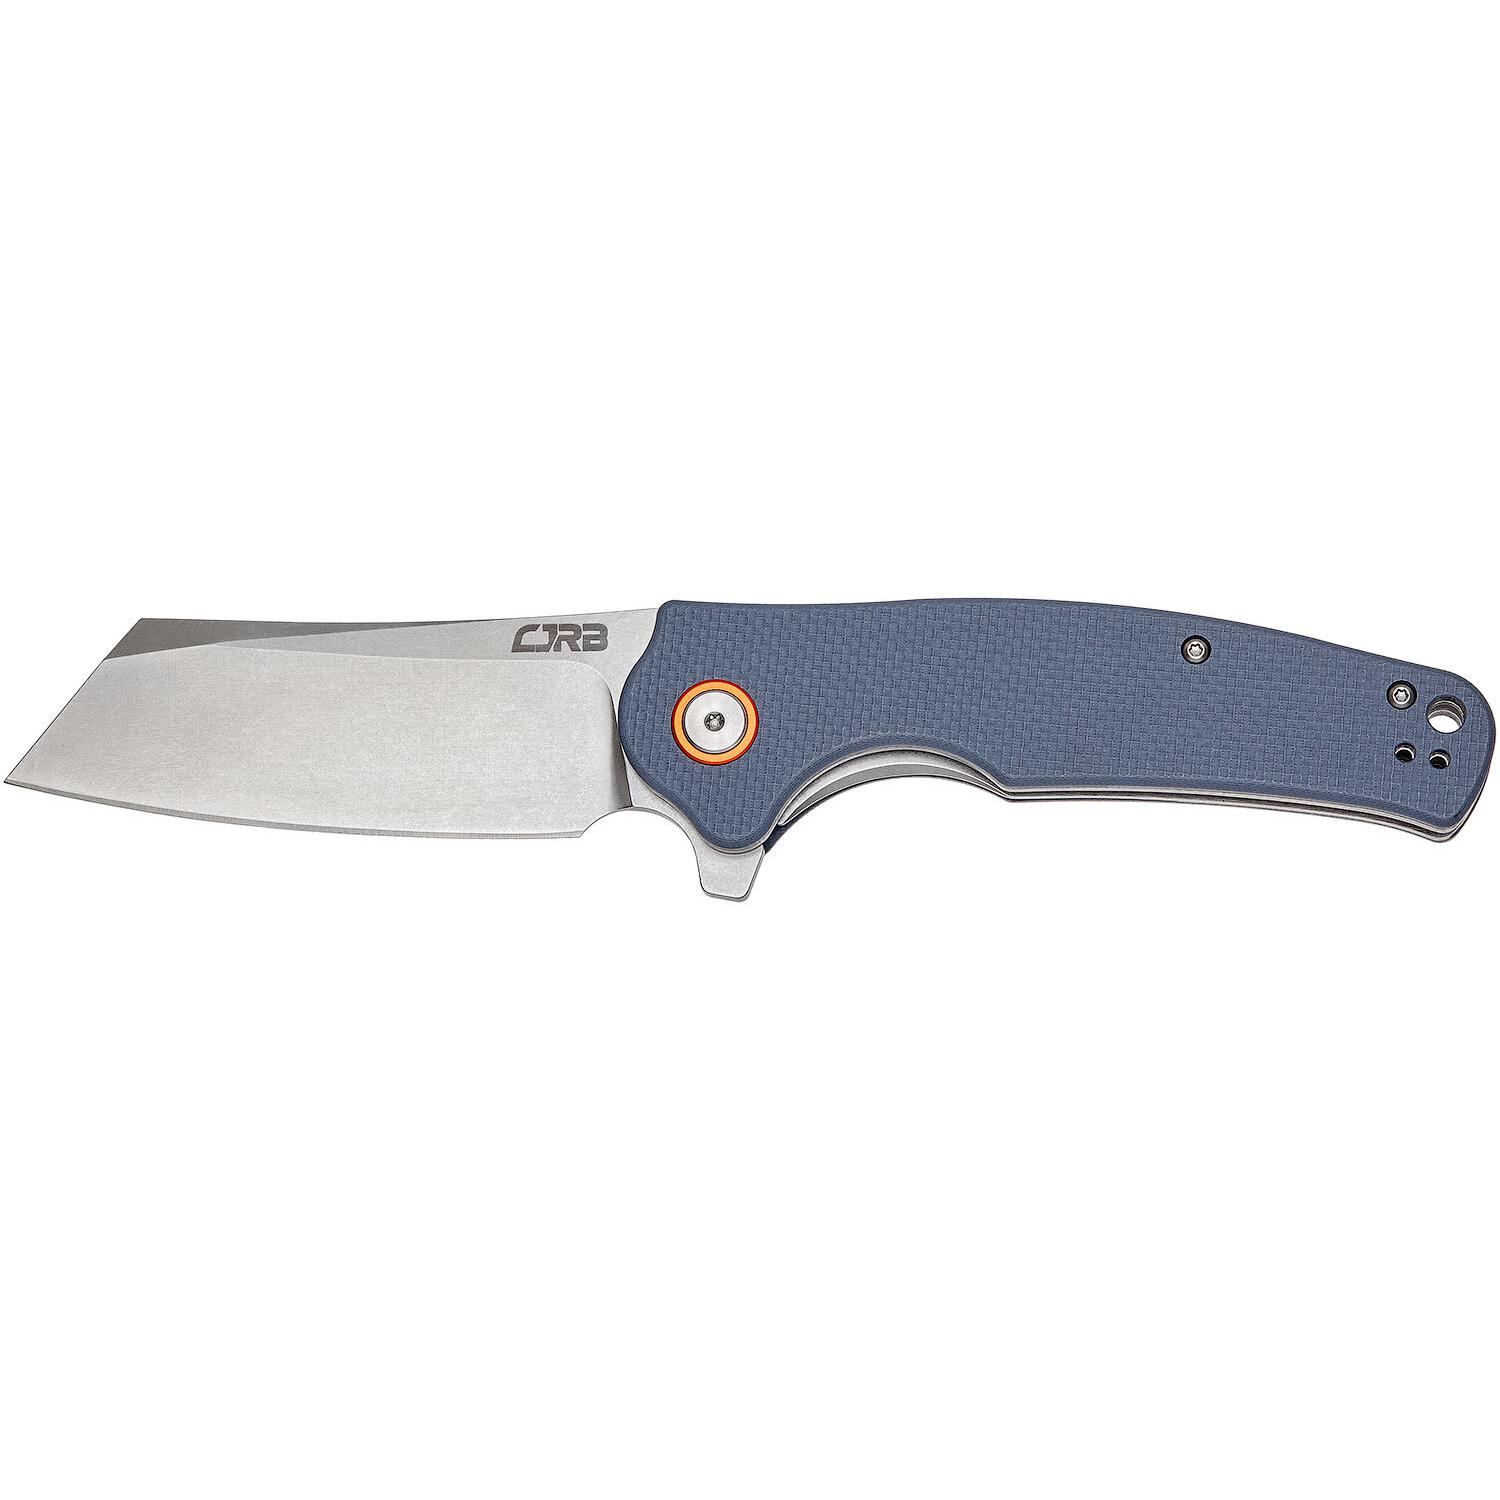 Нож CJRB Crag G10 Gray-blue J1904-GYF 2798.02.43